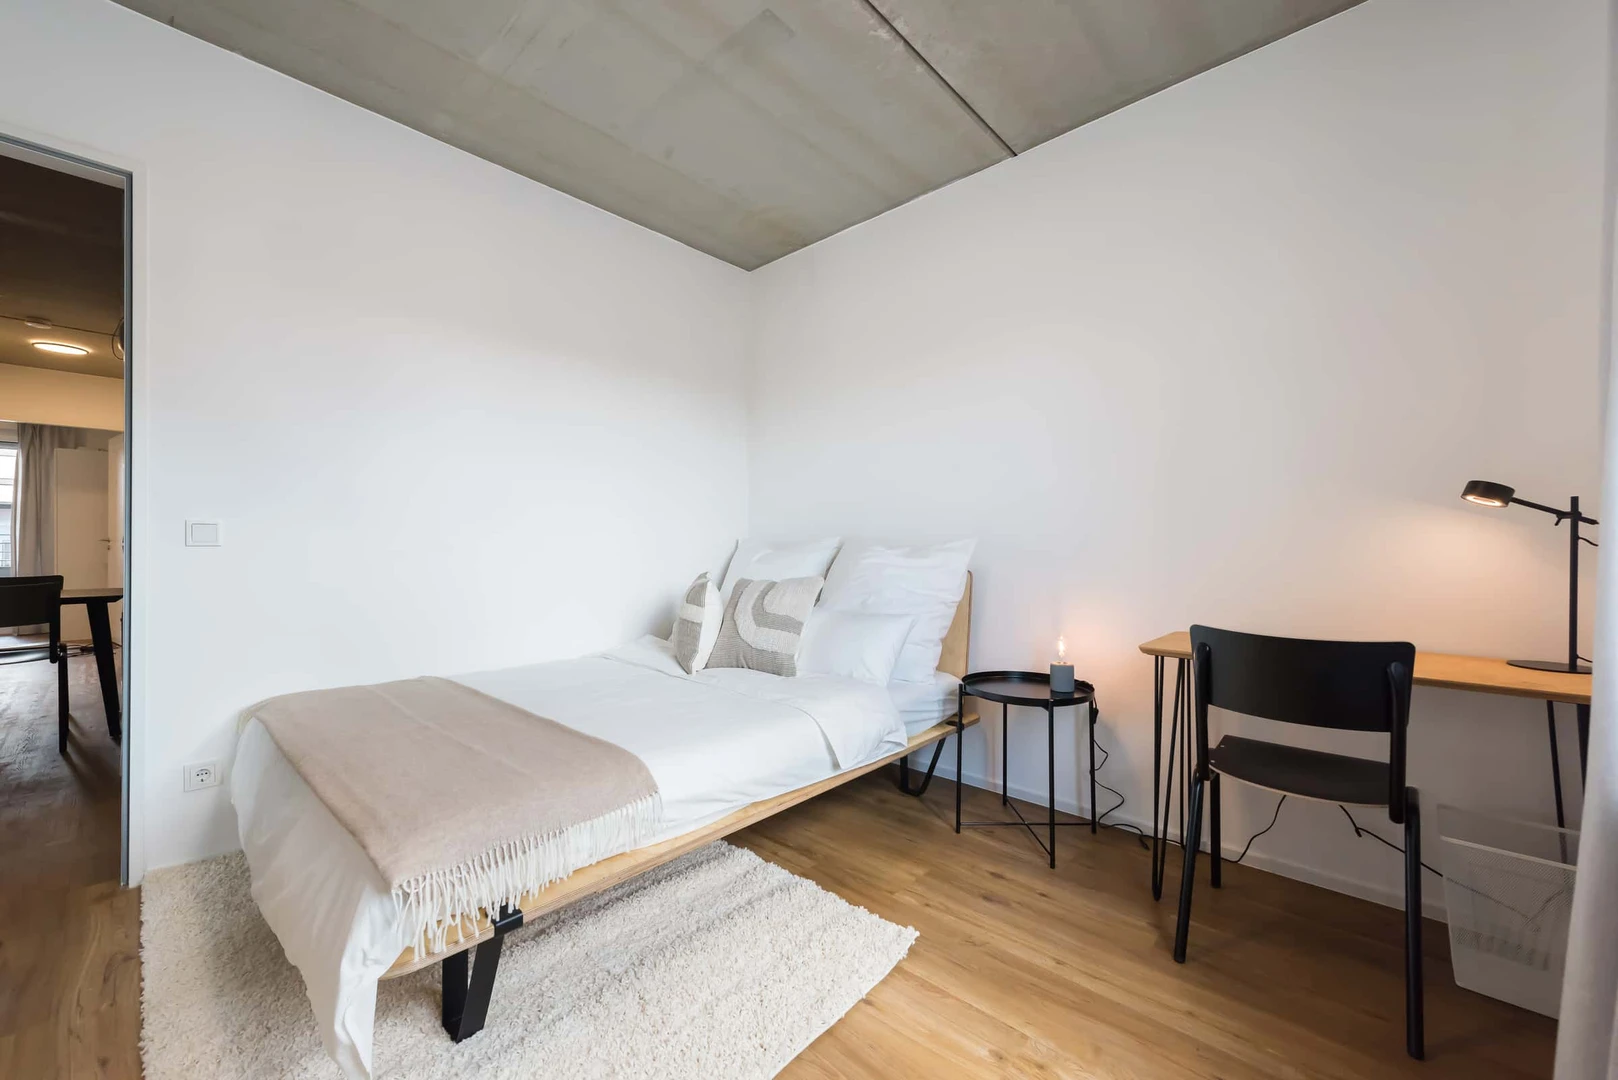 Cheap private room in frankfurt